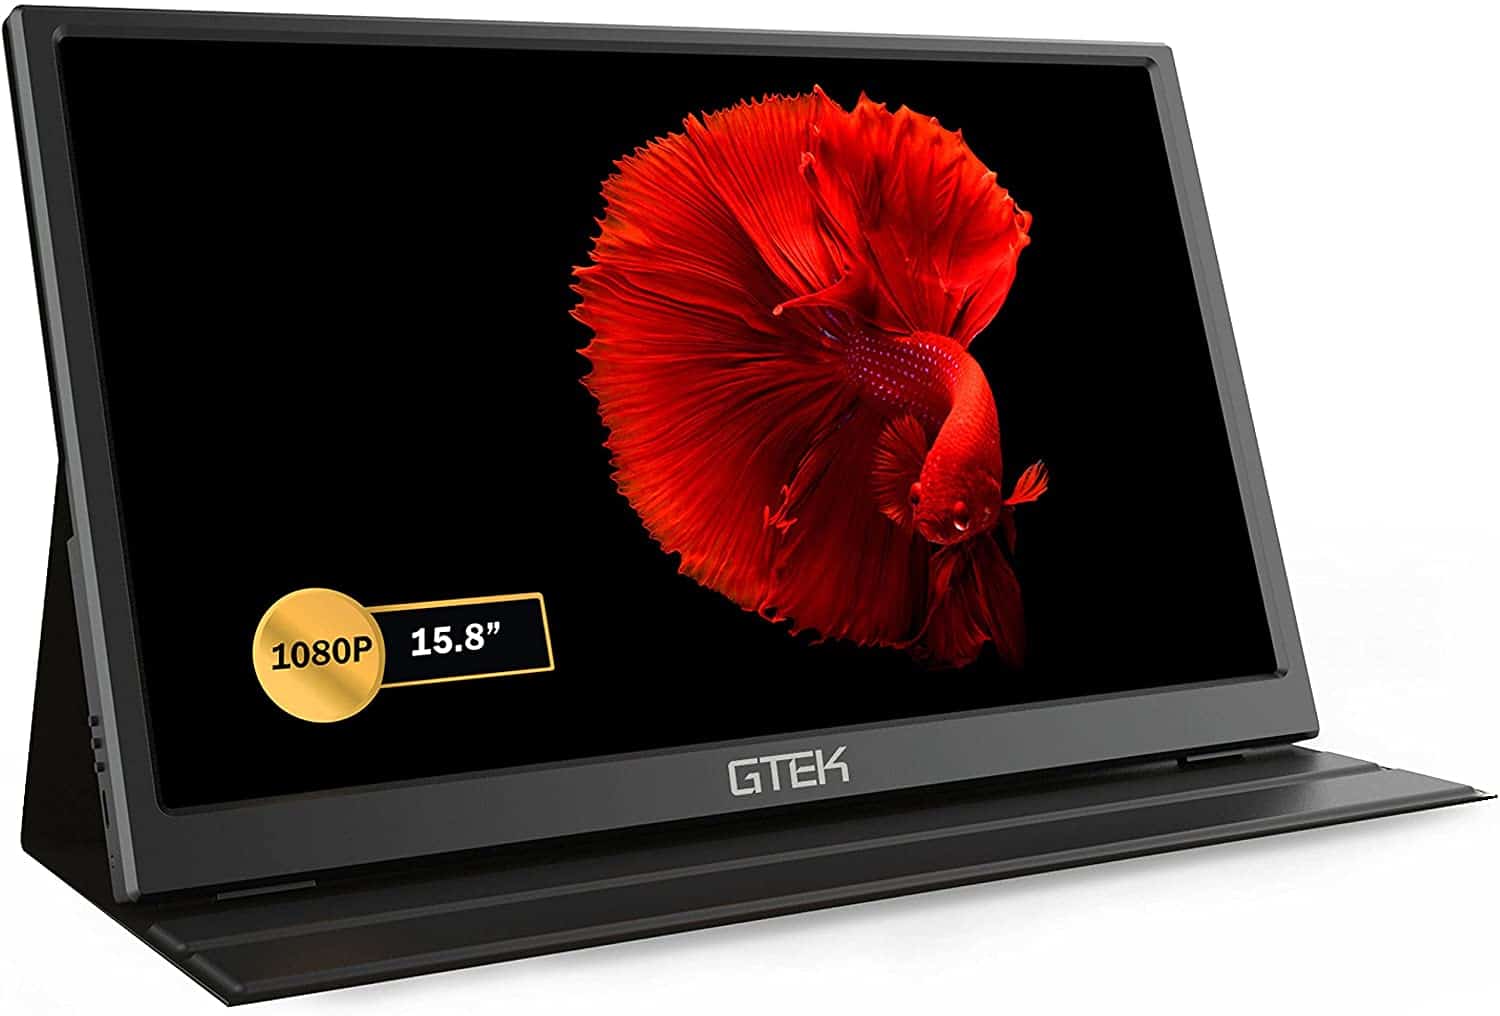 GTEK touchscreen monitor for Mac